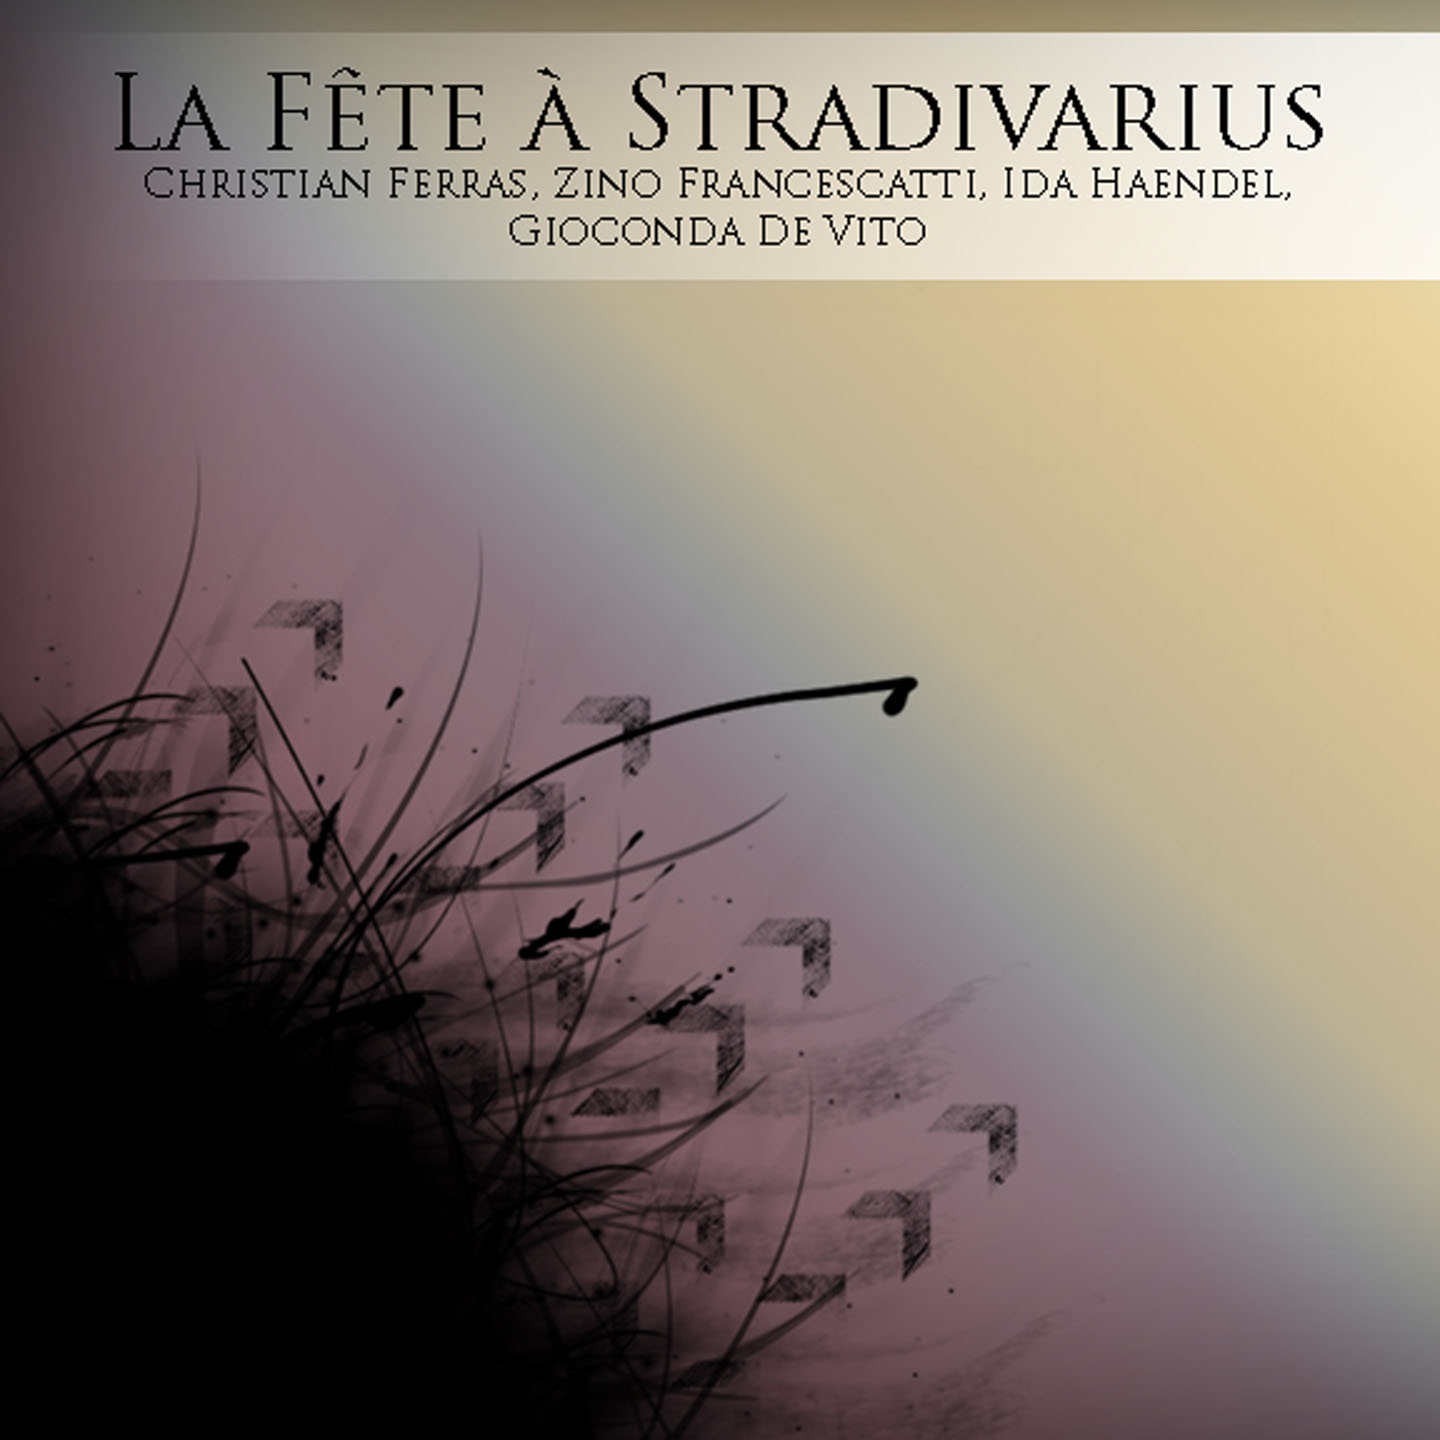 La F te a Stradivarius: Christian Ferras, Zino Francescatti, Ida Haendel, Gioconda De Vito